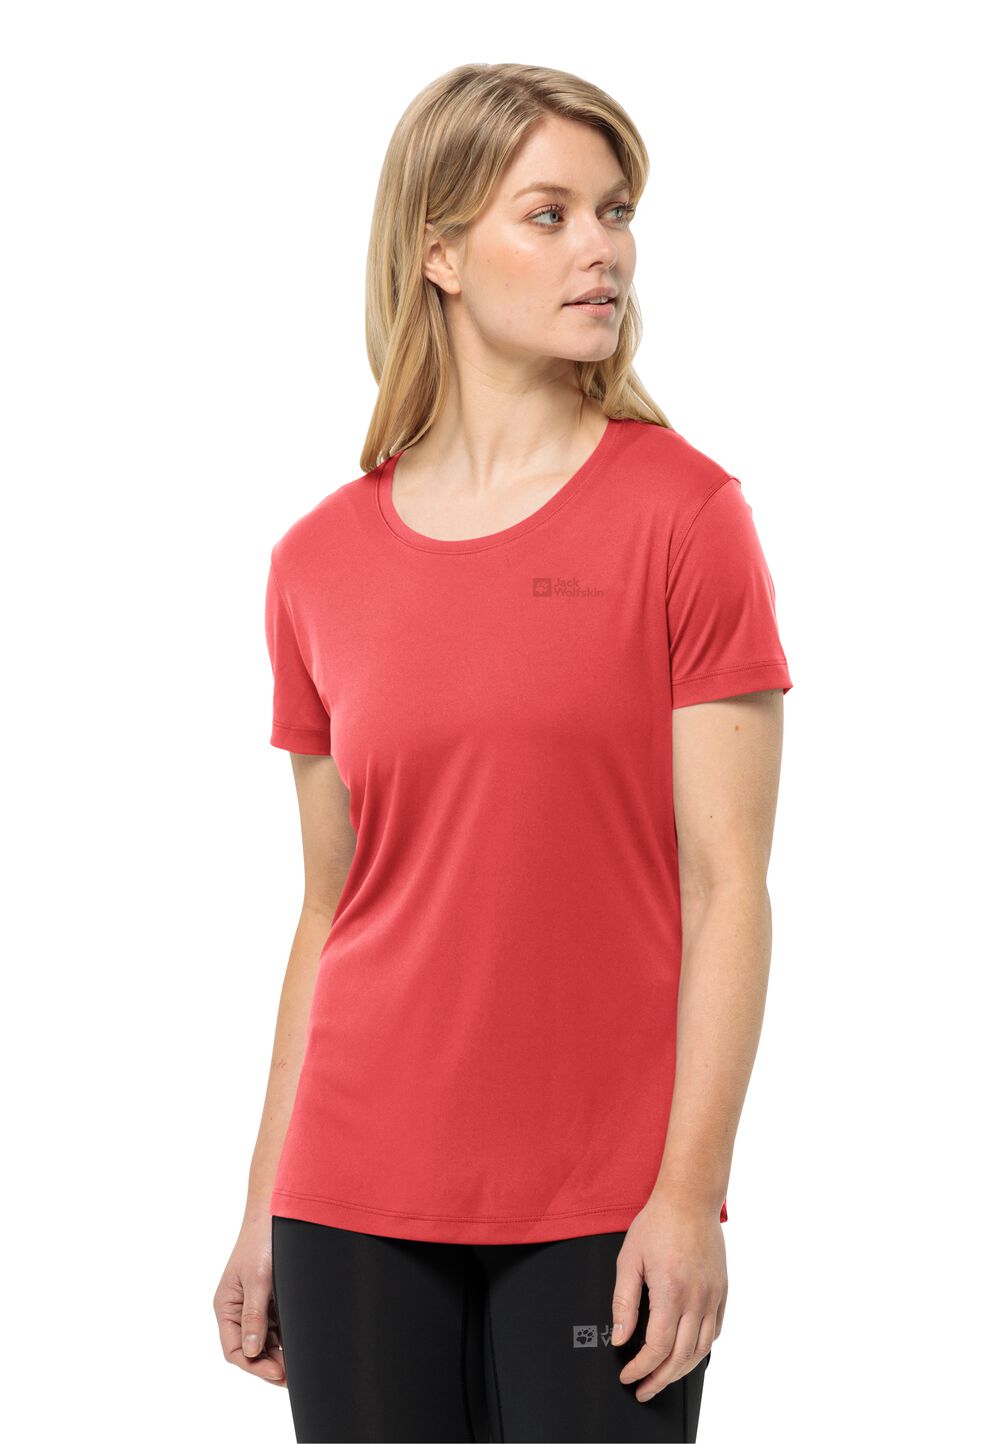 Jack Wolfskin Tech T-Shirt Women Functioneel shirt Dames XS rood vibrant red